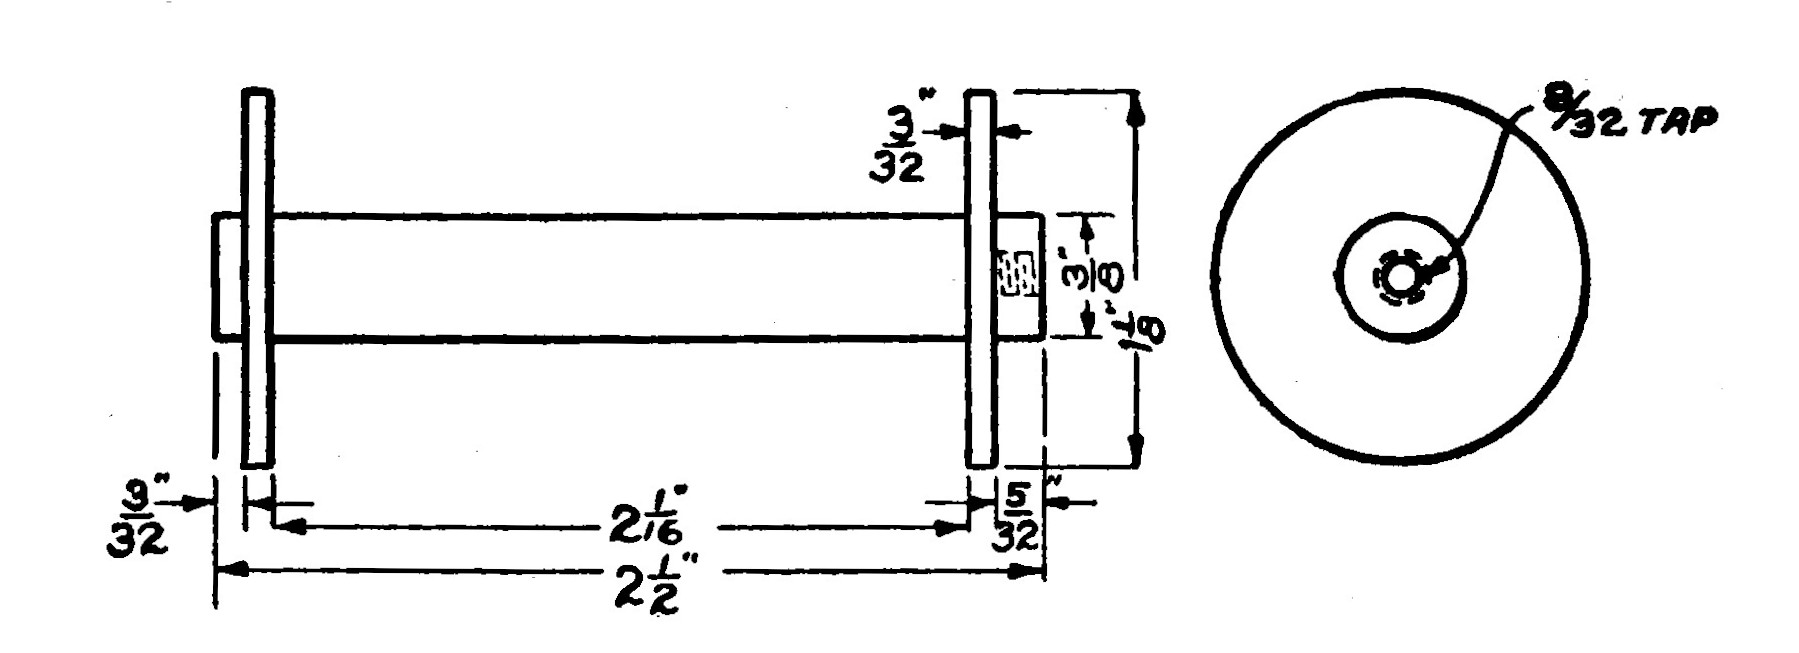 FIG. 52.—Details showing the size of the Magnet Bobbin.